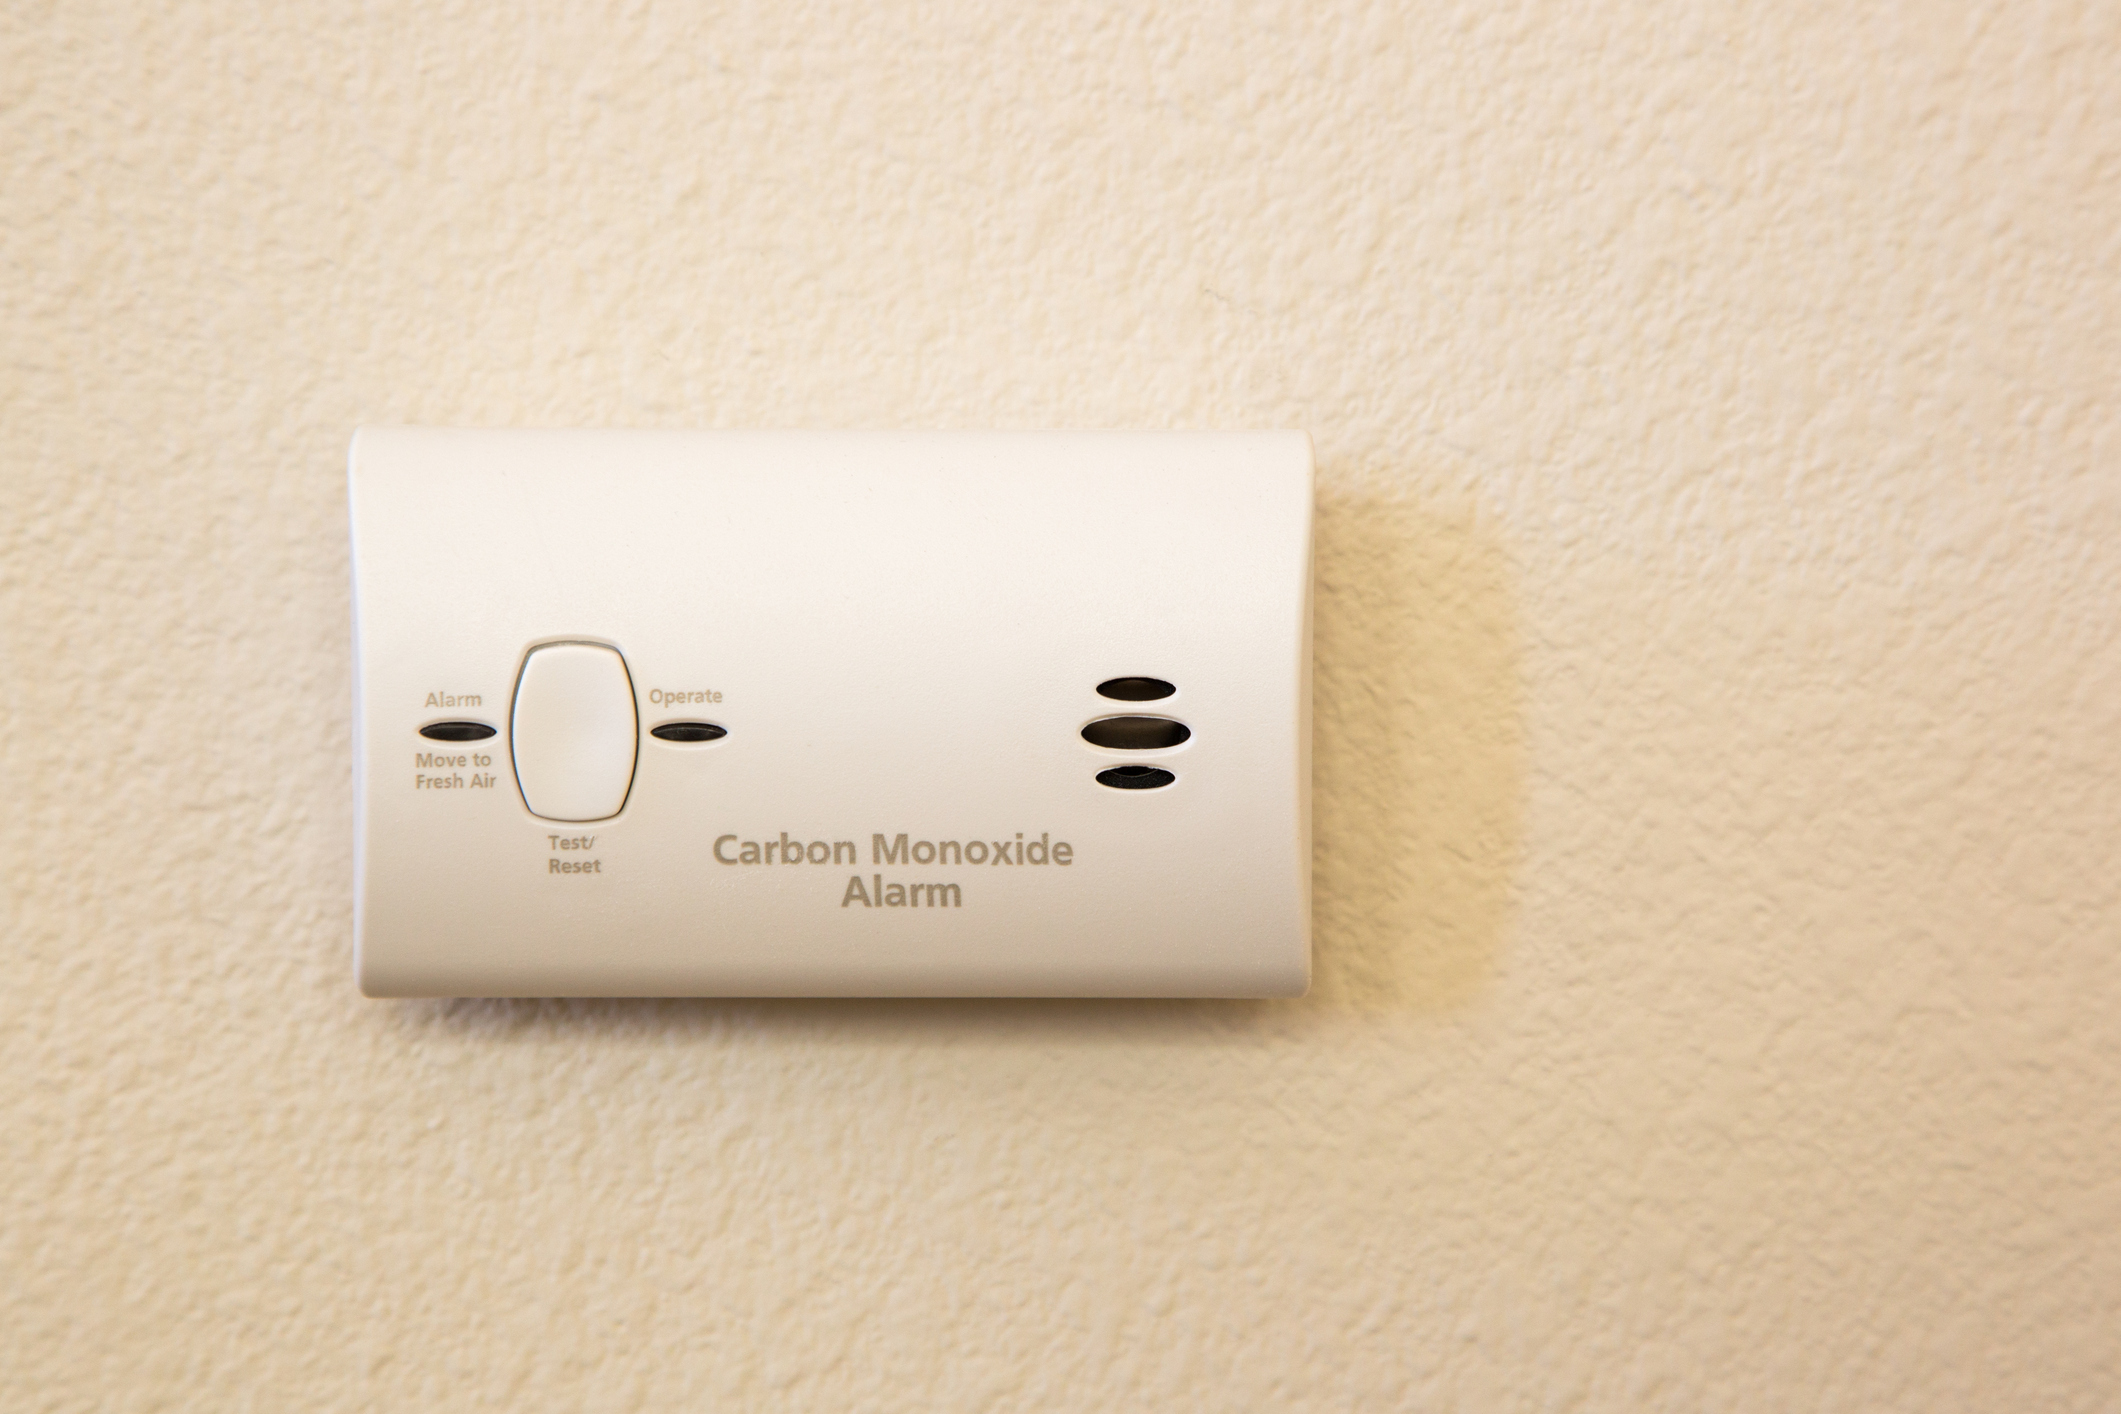 Carbon Monoxide regulations for Central Housing Group